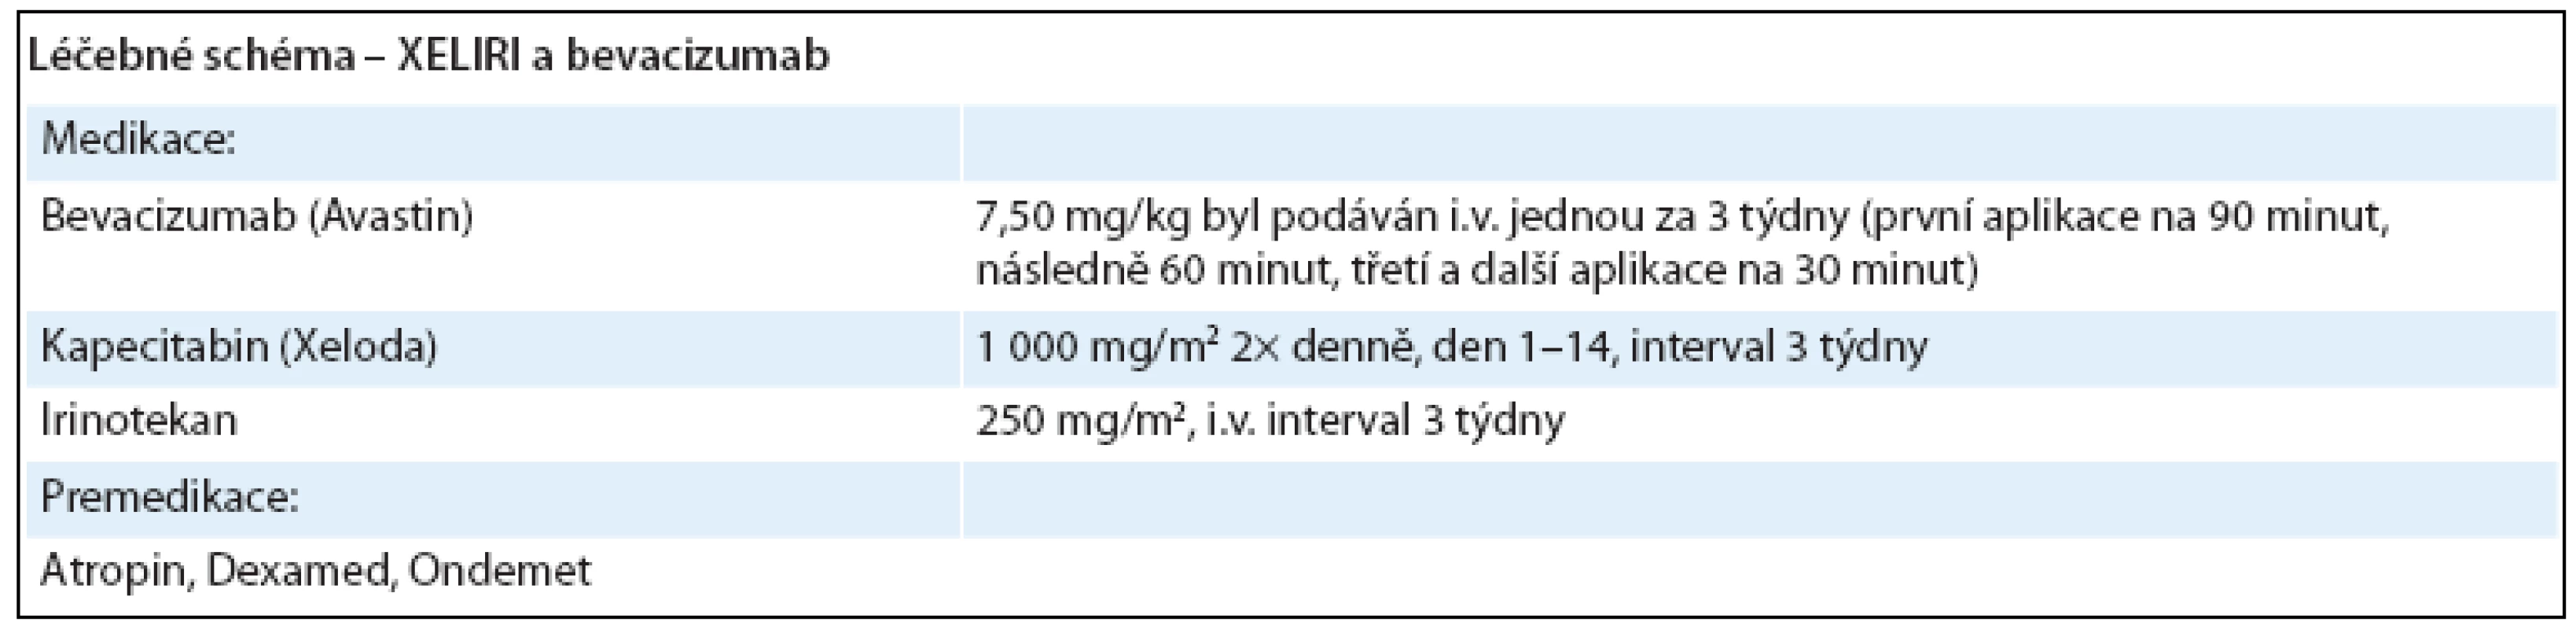 Léčebné schéma režimu XELIRI + bevacizumab.